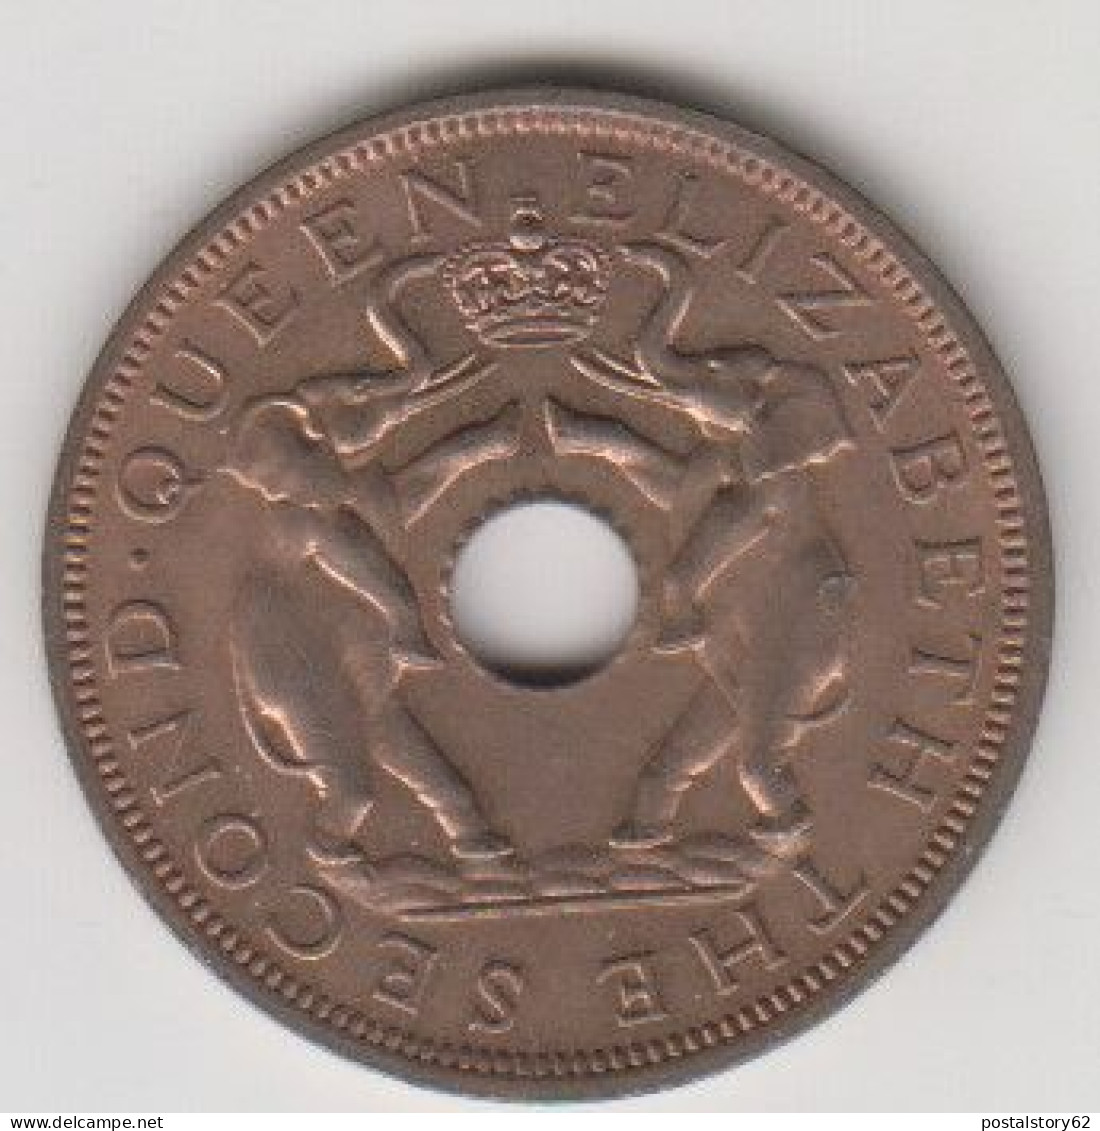 Rhodesia & Nyasaland One Penny 1958 FDC Unc. - Rhodesien